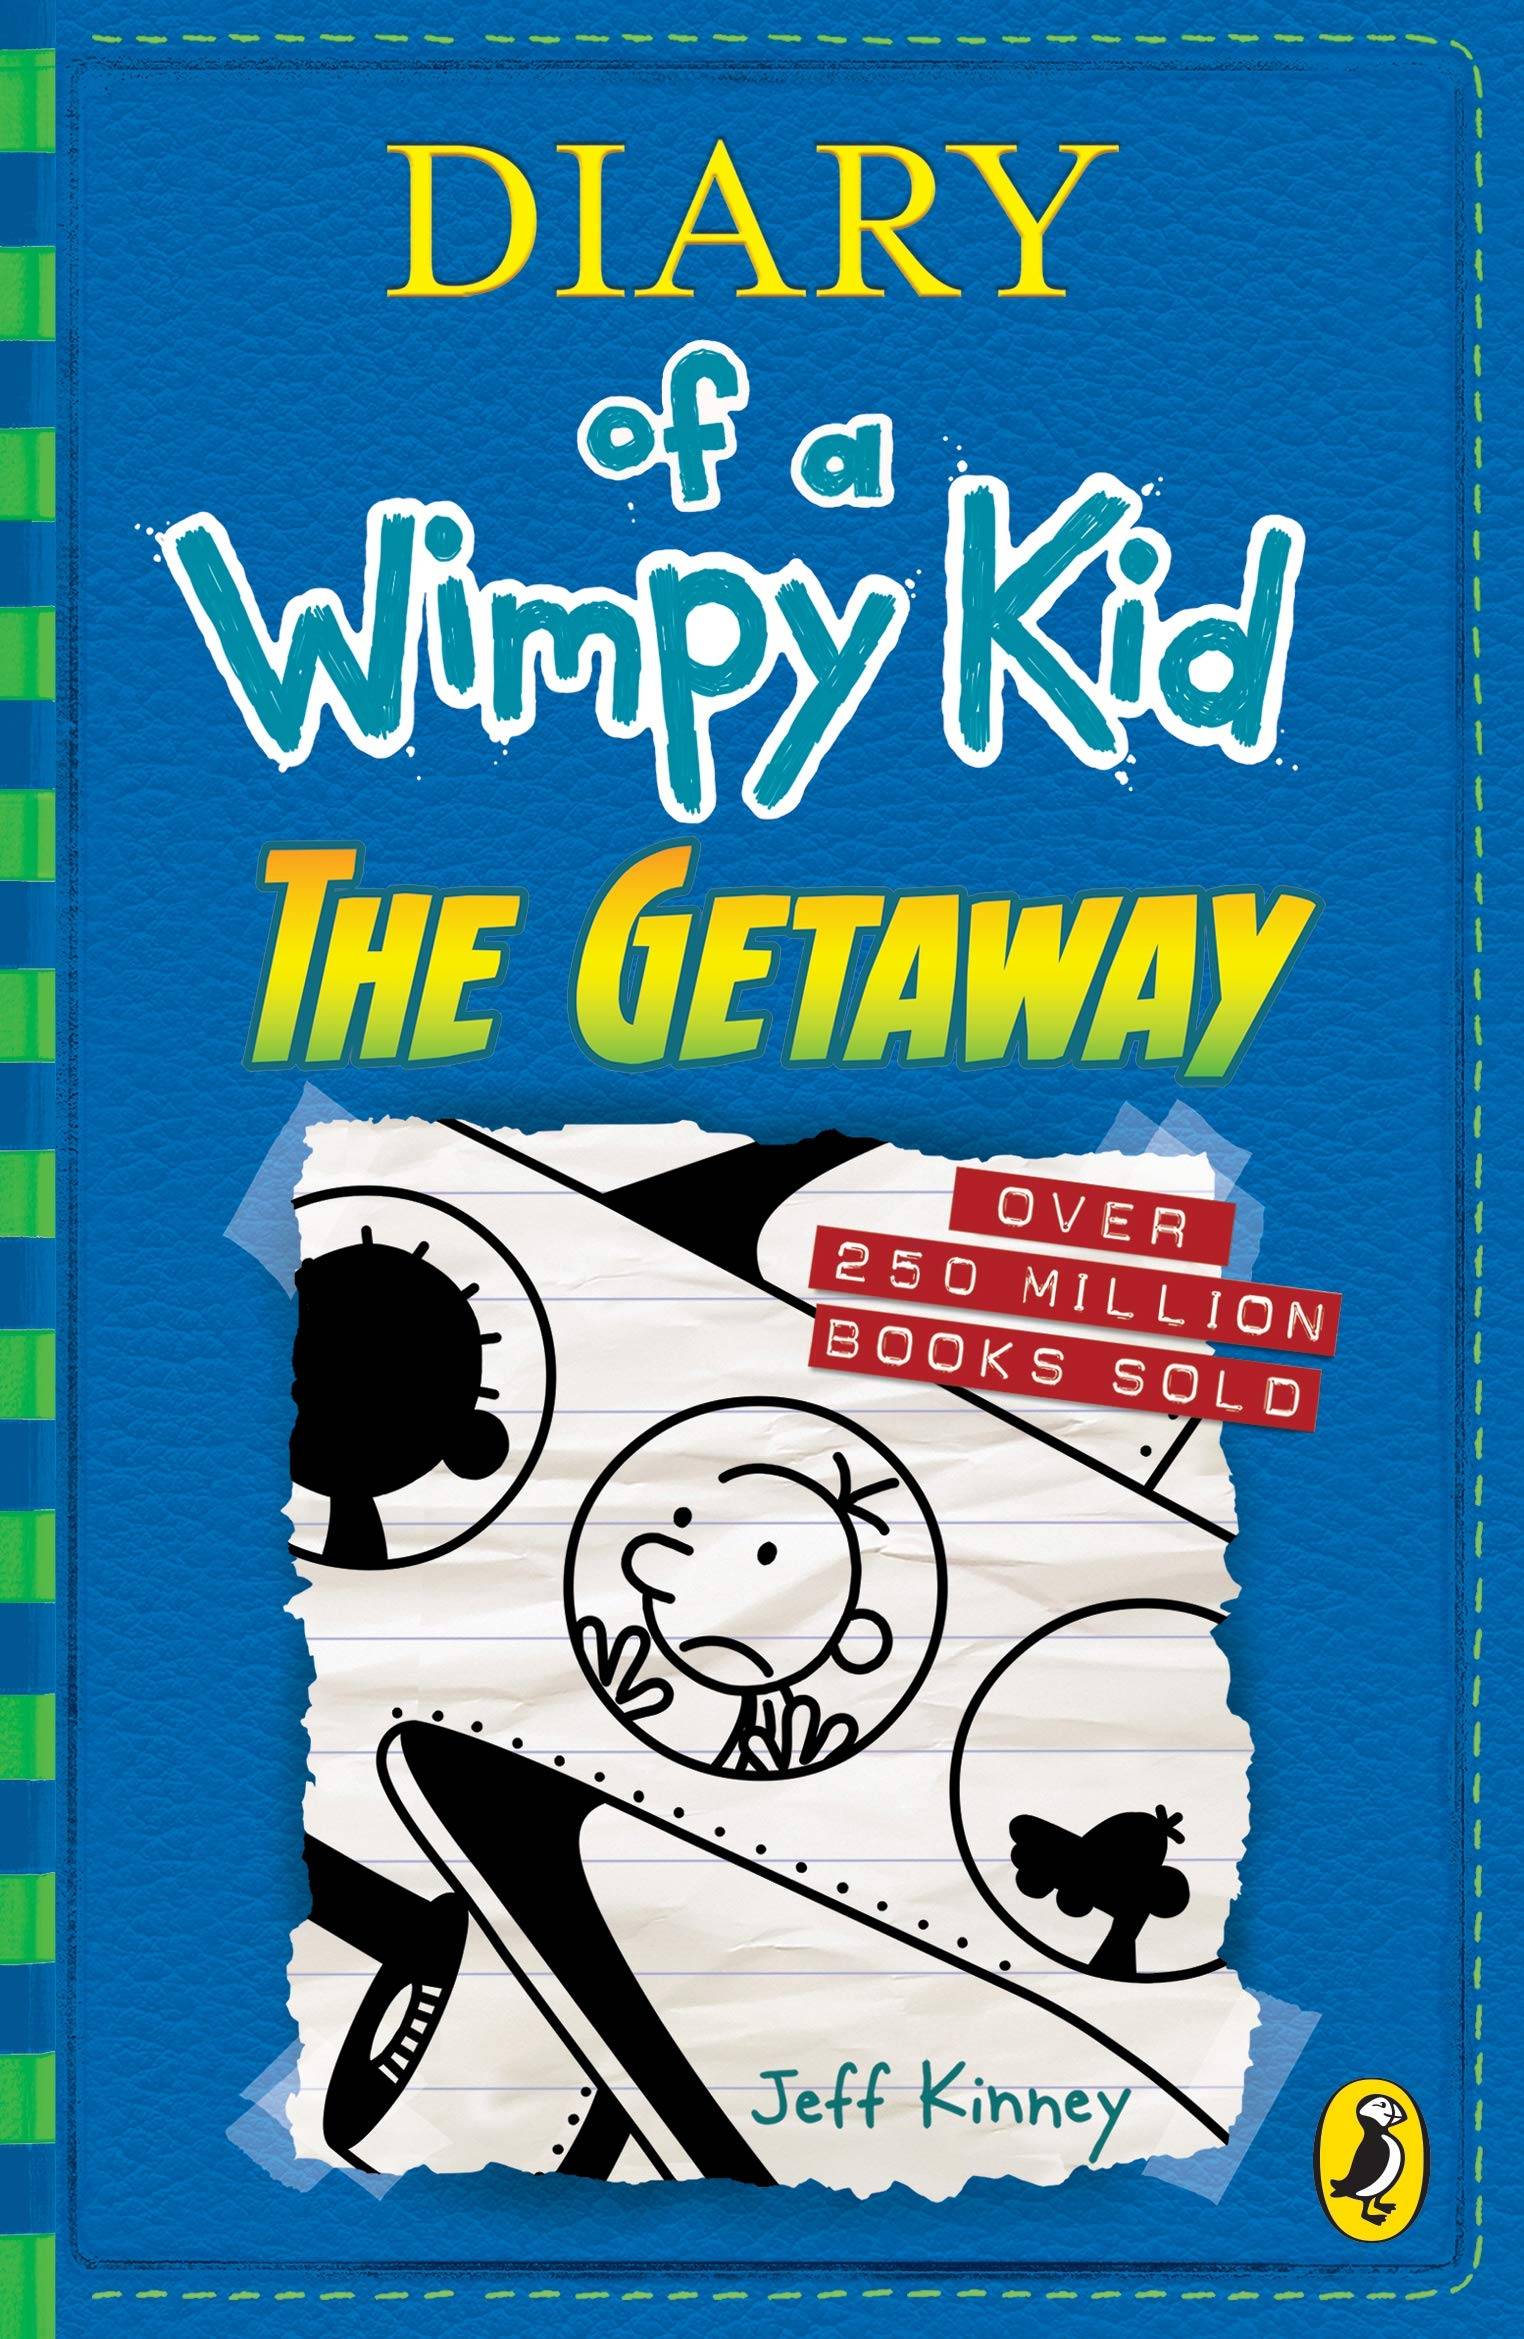 IMG : Wimpy kid-The getaway